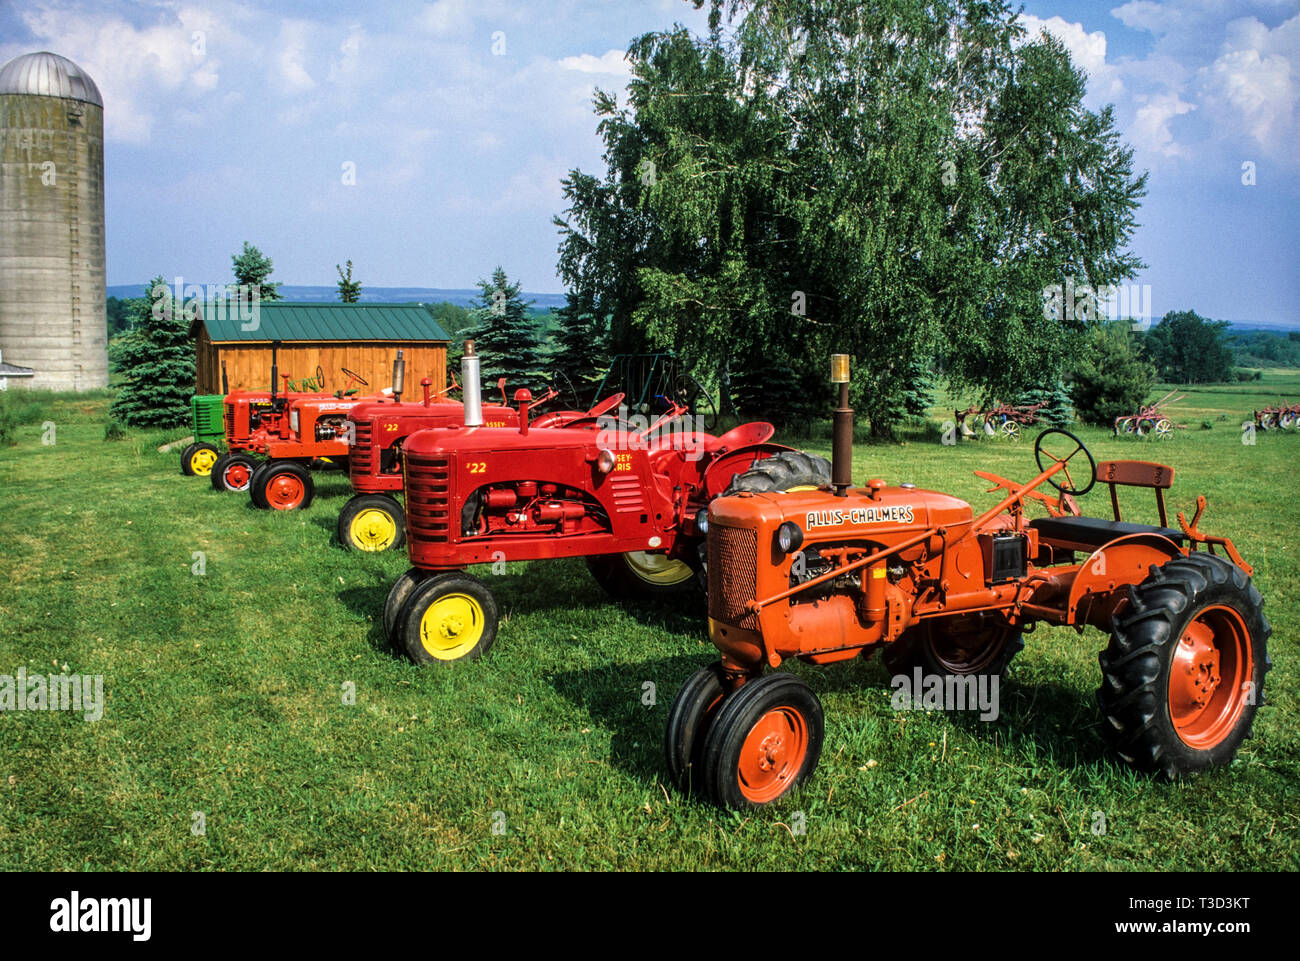 Vintage restored tractors, Chautauqua, New York, USA, US, vintage tractors spring, antique images farmland Stock Photo